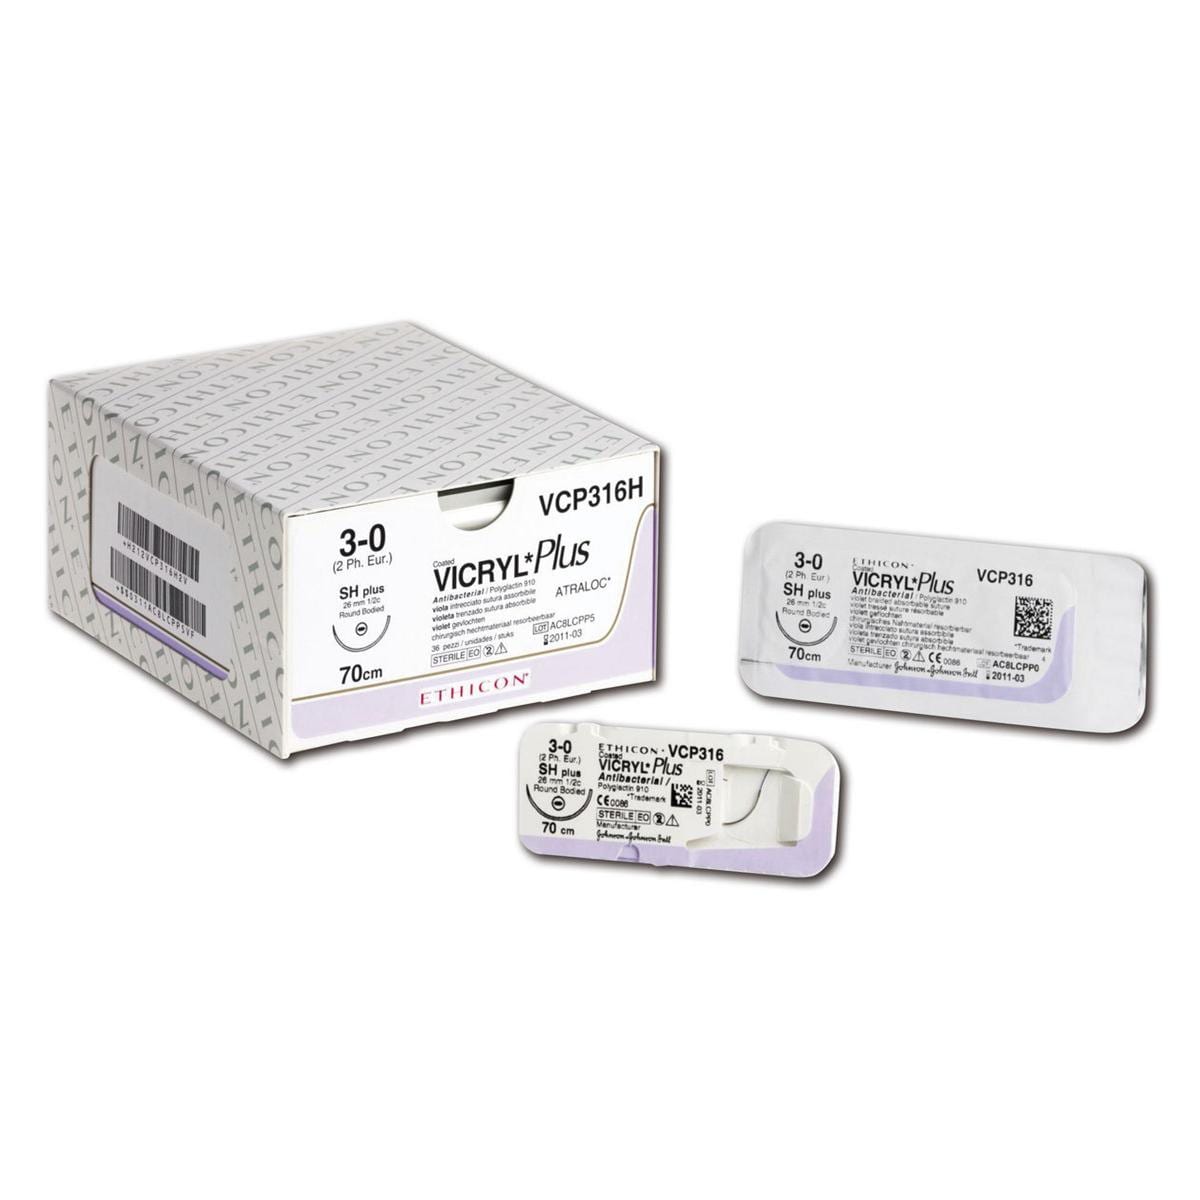 Vicryl Plus - USP 4-0 FS2 70 cm violet VCP397, per 36 stuks